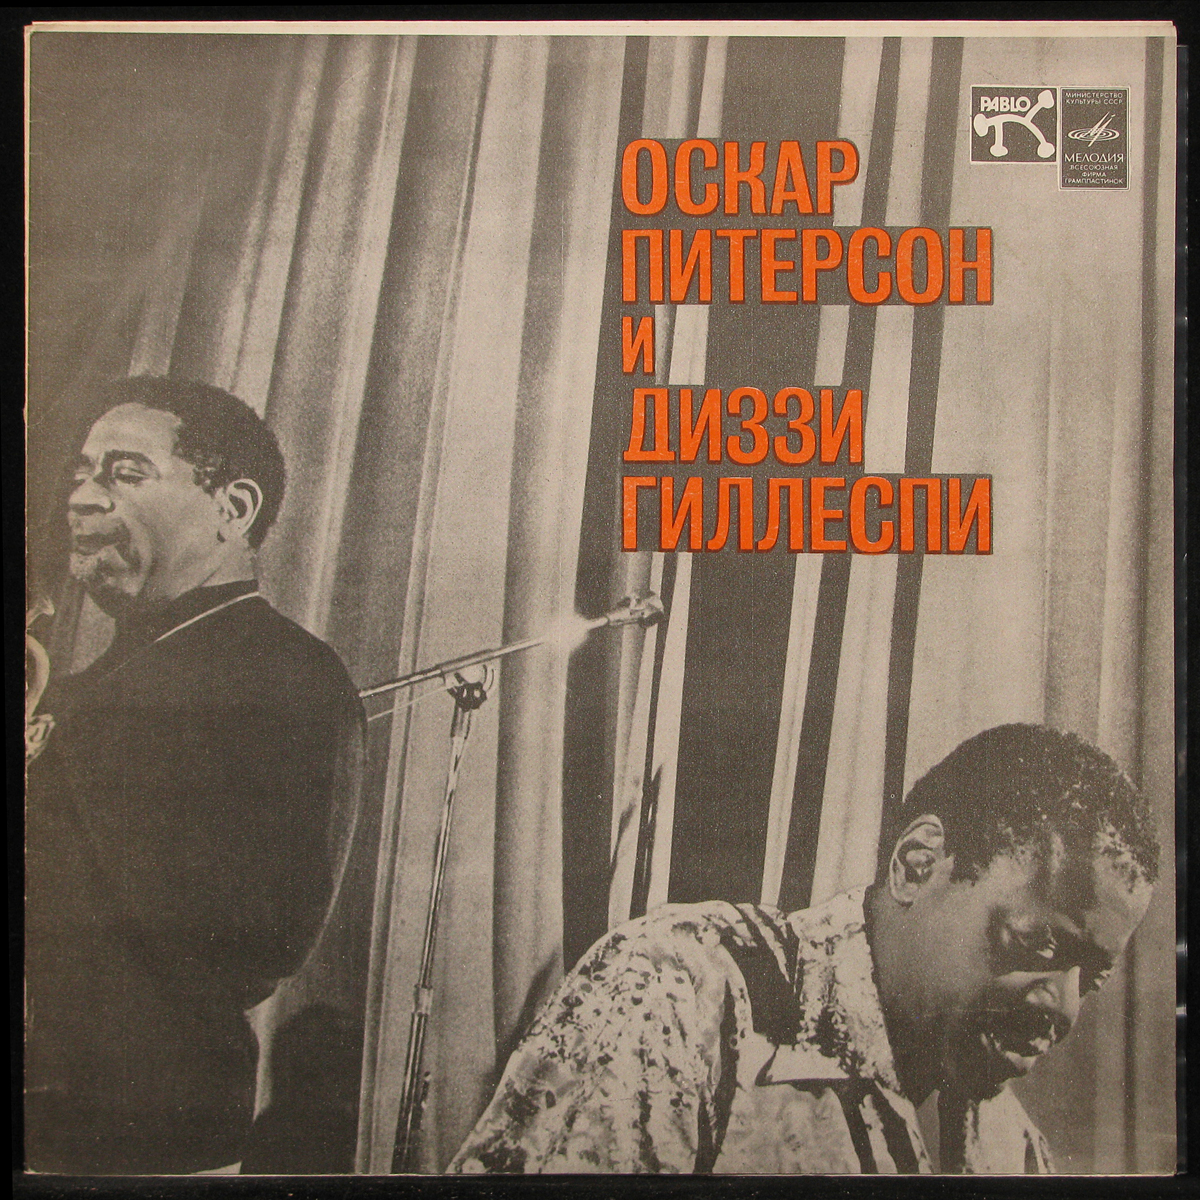 LP Oscar Peterson & Dizzy Gillespie — Оскар Питерсон И Диззи Гиллеспи фото